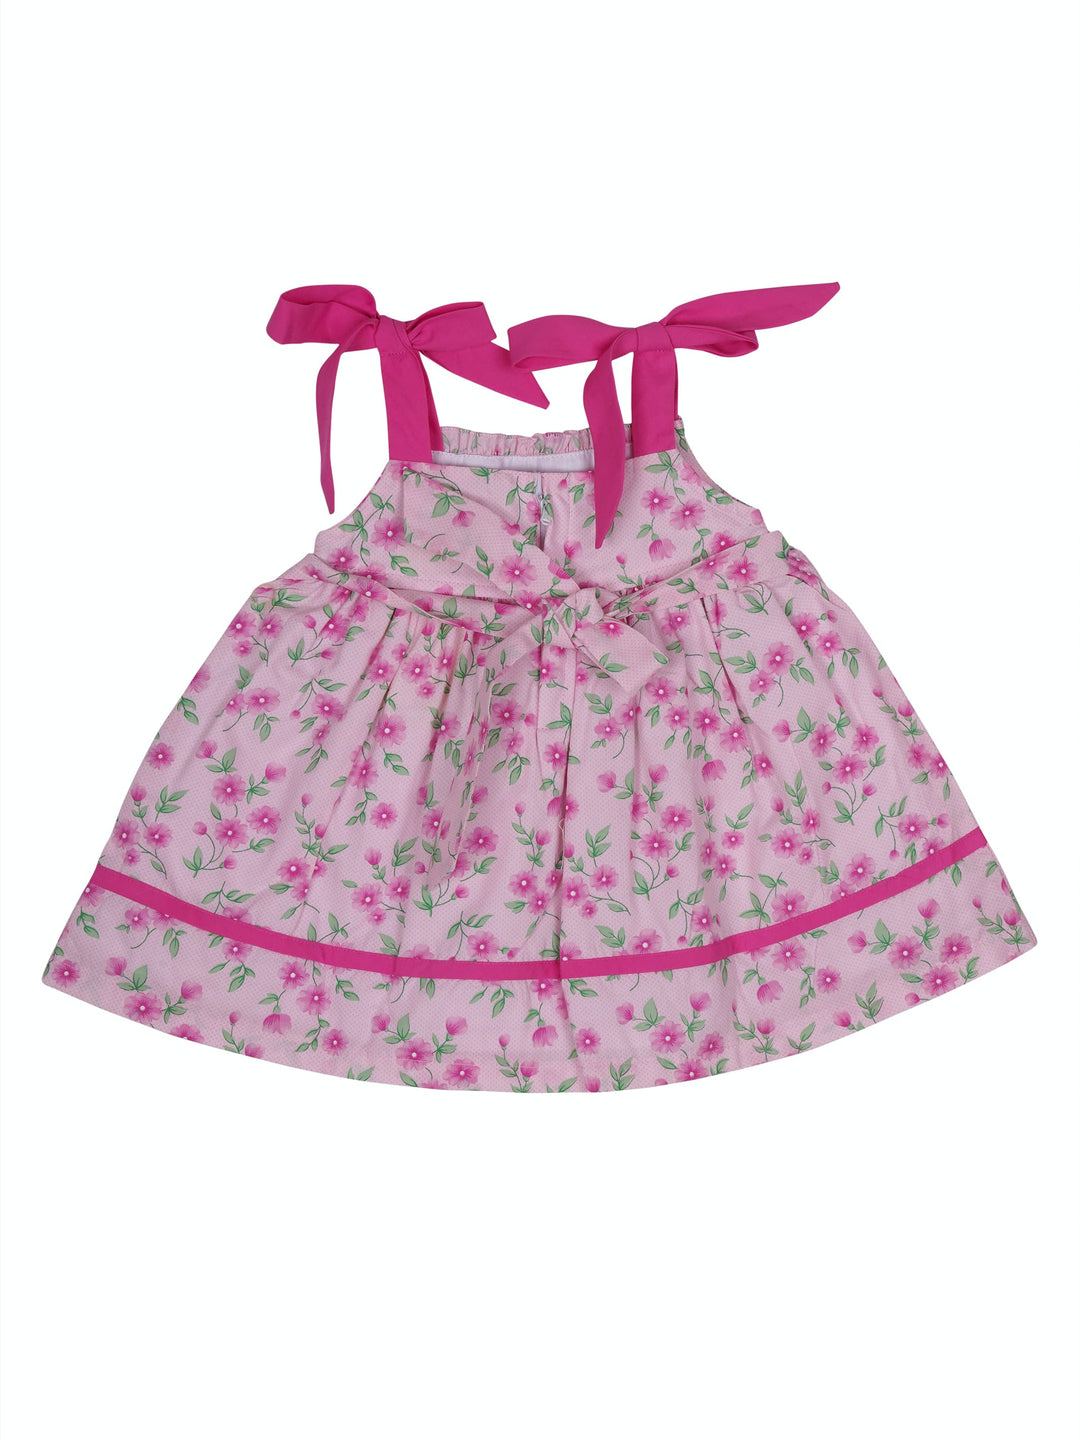 The Nesavu Frocks & Dresses Pink Tie-Up Soft Cotton Gown For Baby Girls psr silks Nesavu 12 (3M) / pink GFC841